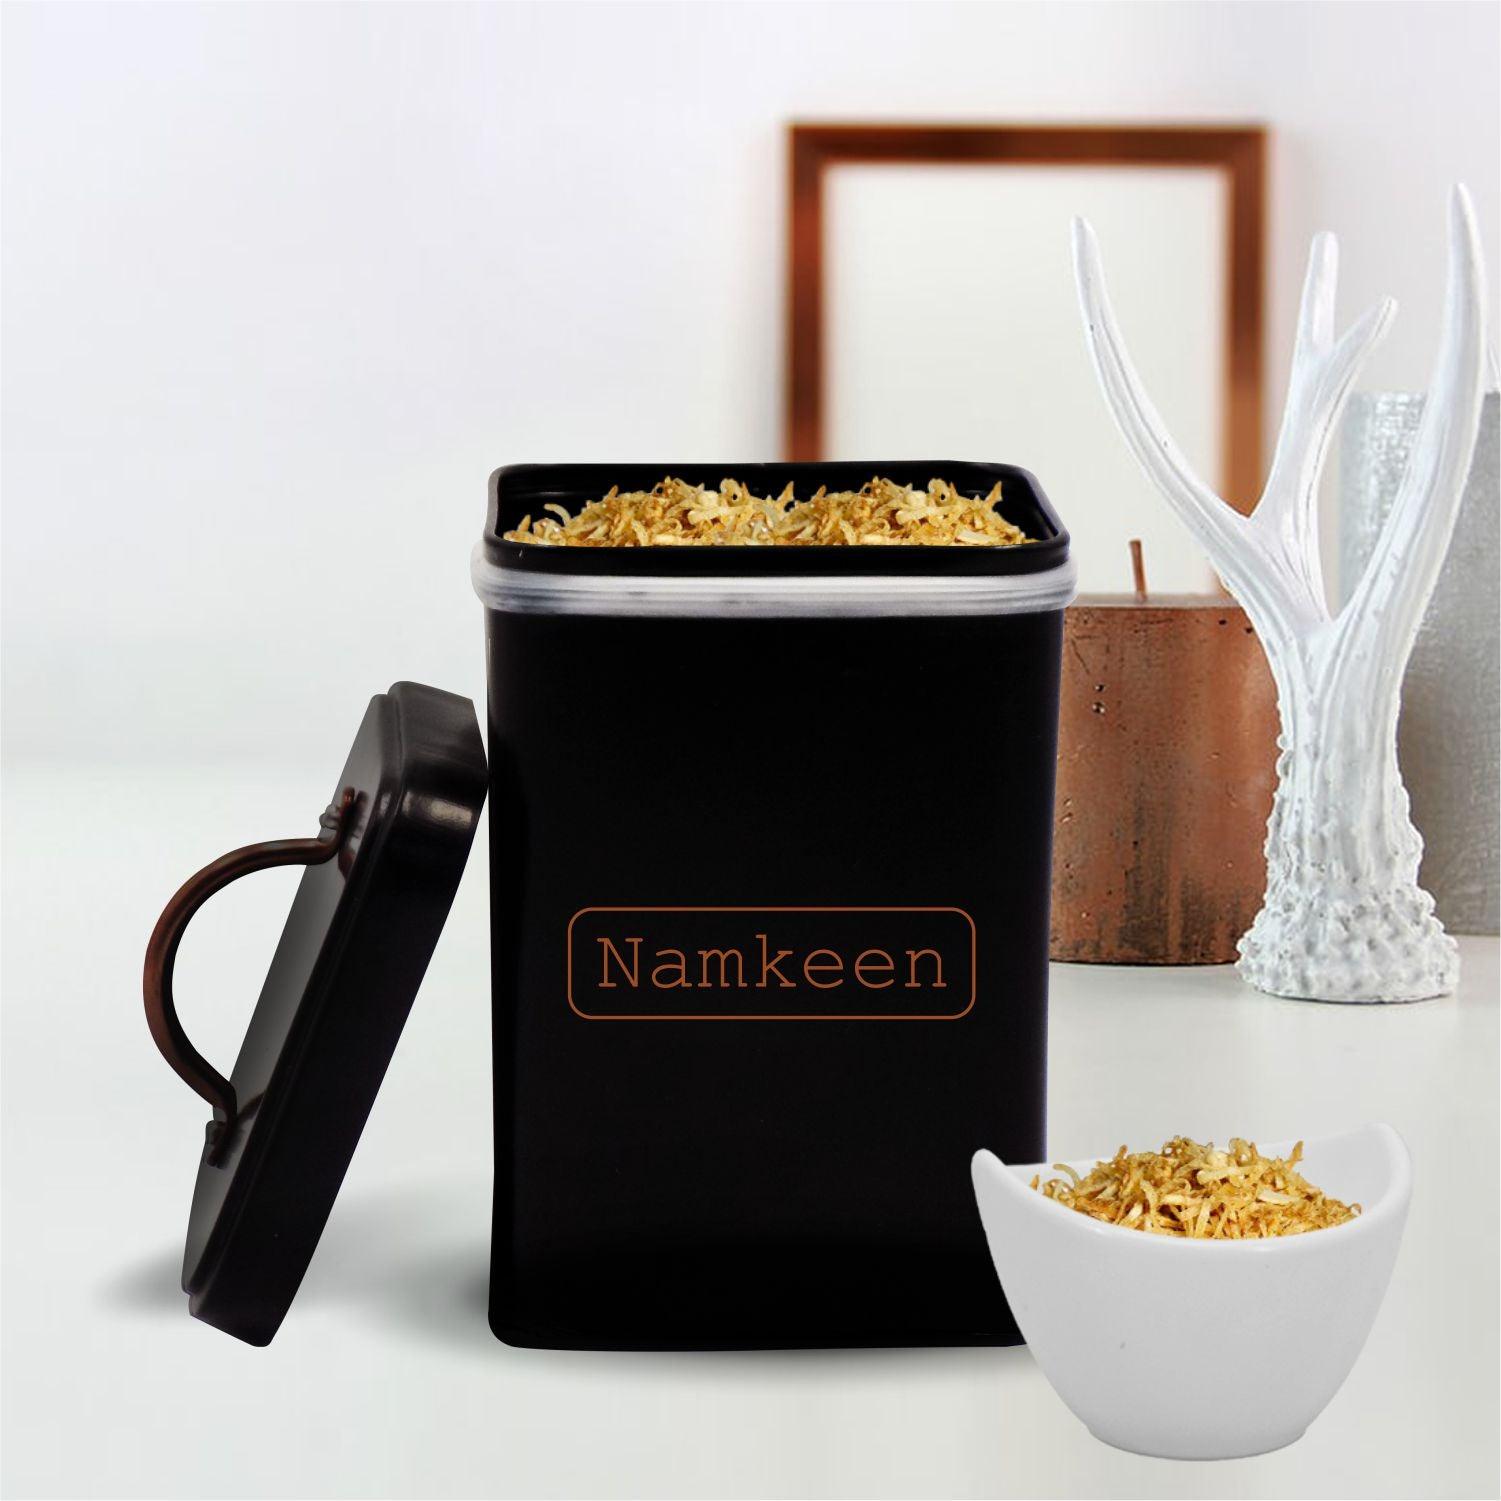 Market99 Namkeen Jar with Lid - (Black, 1900mL) - MARKET 99